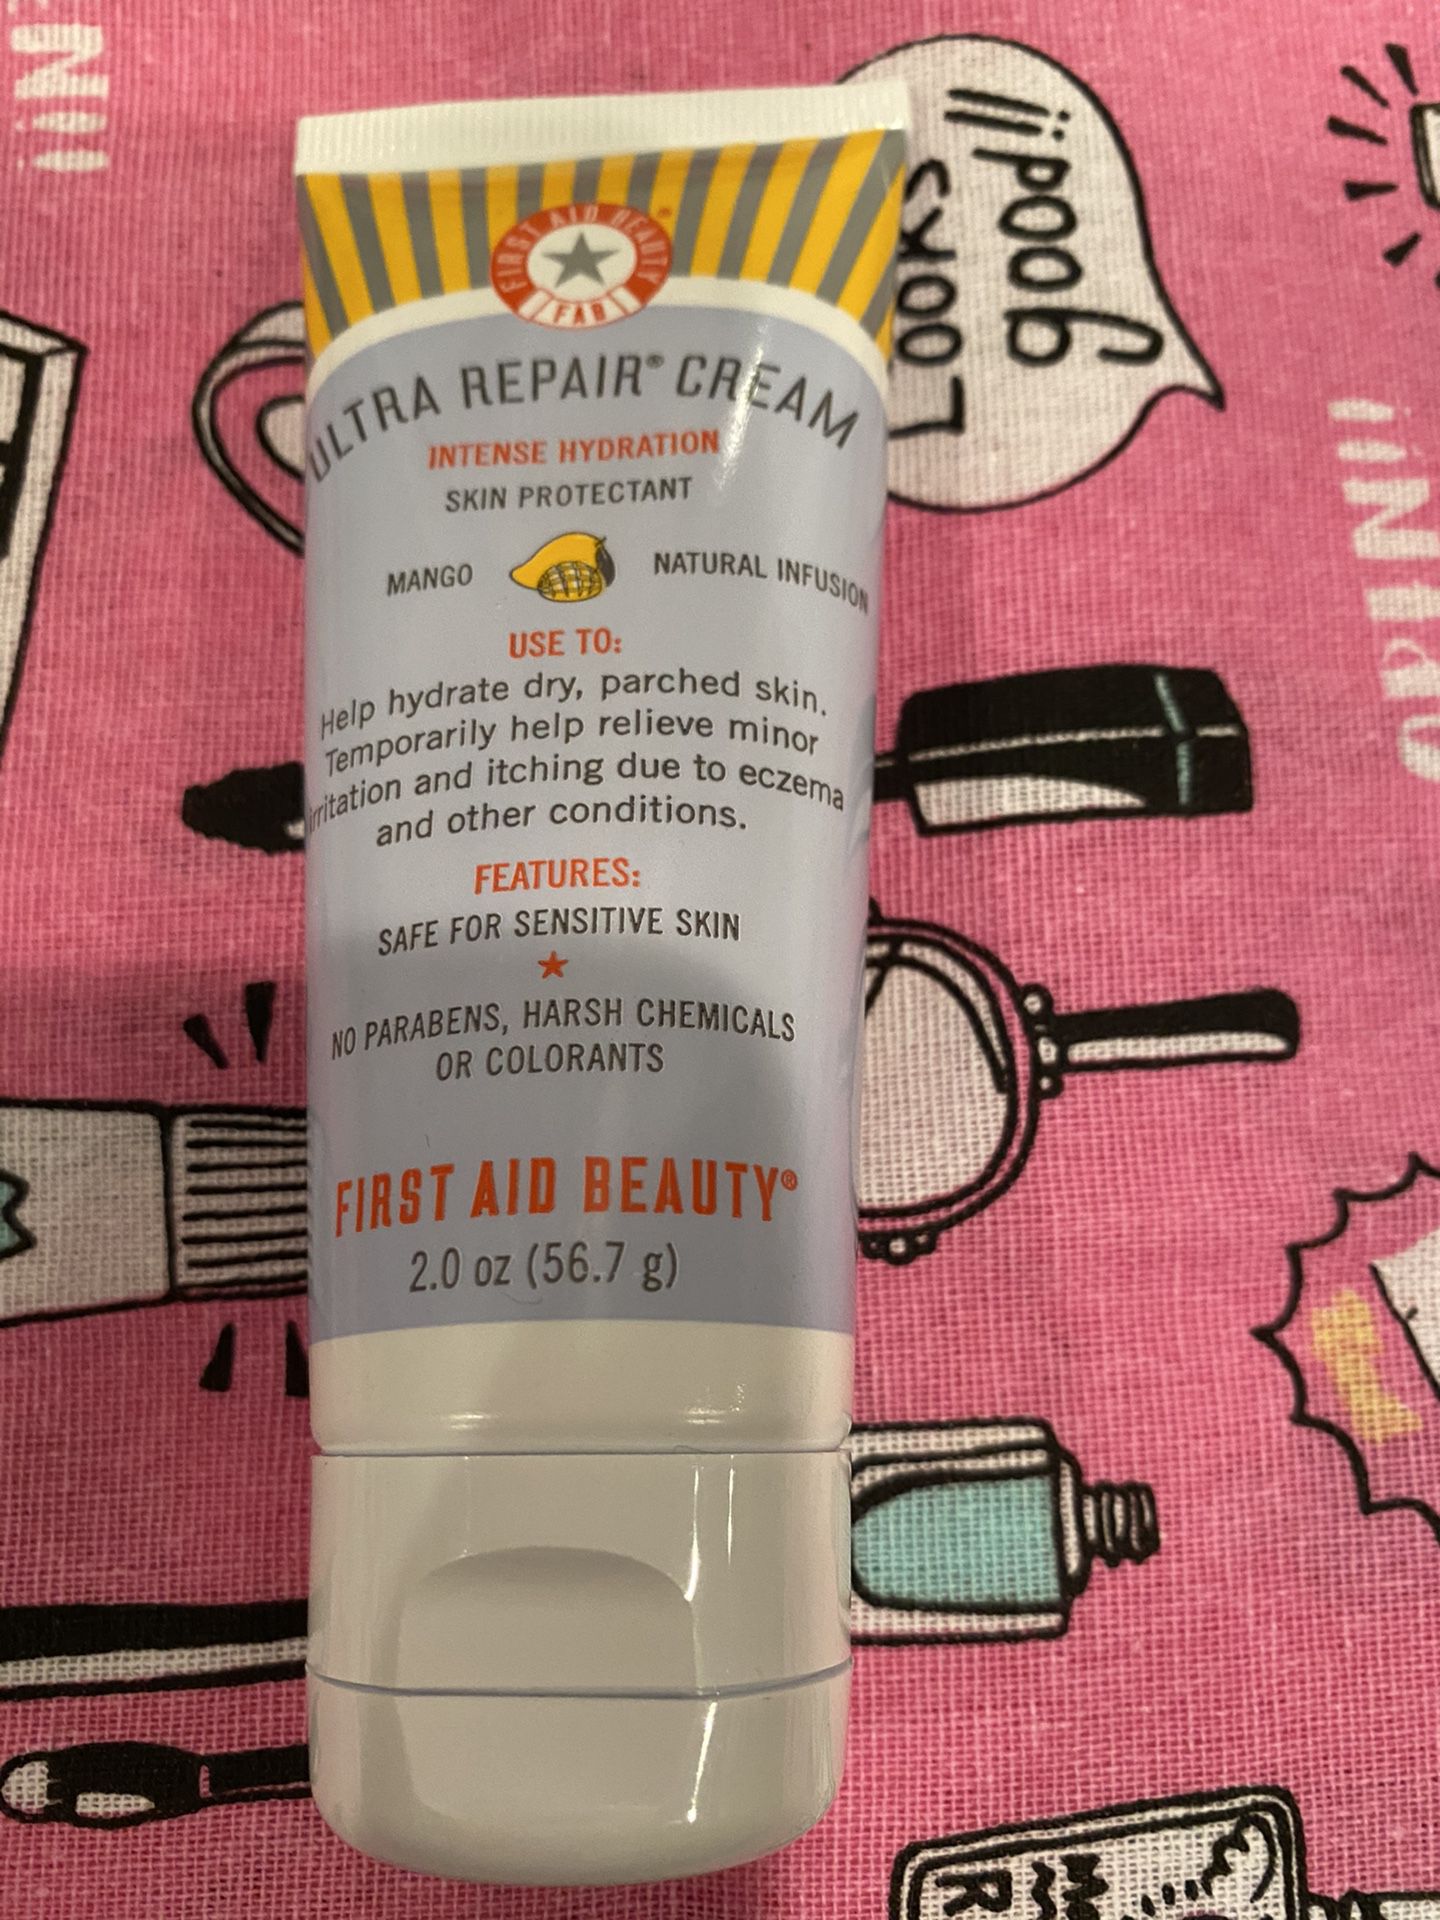 First aid beauty cream